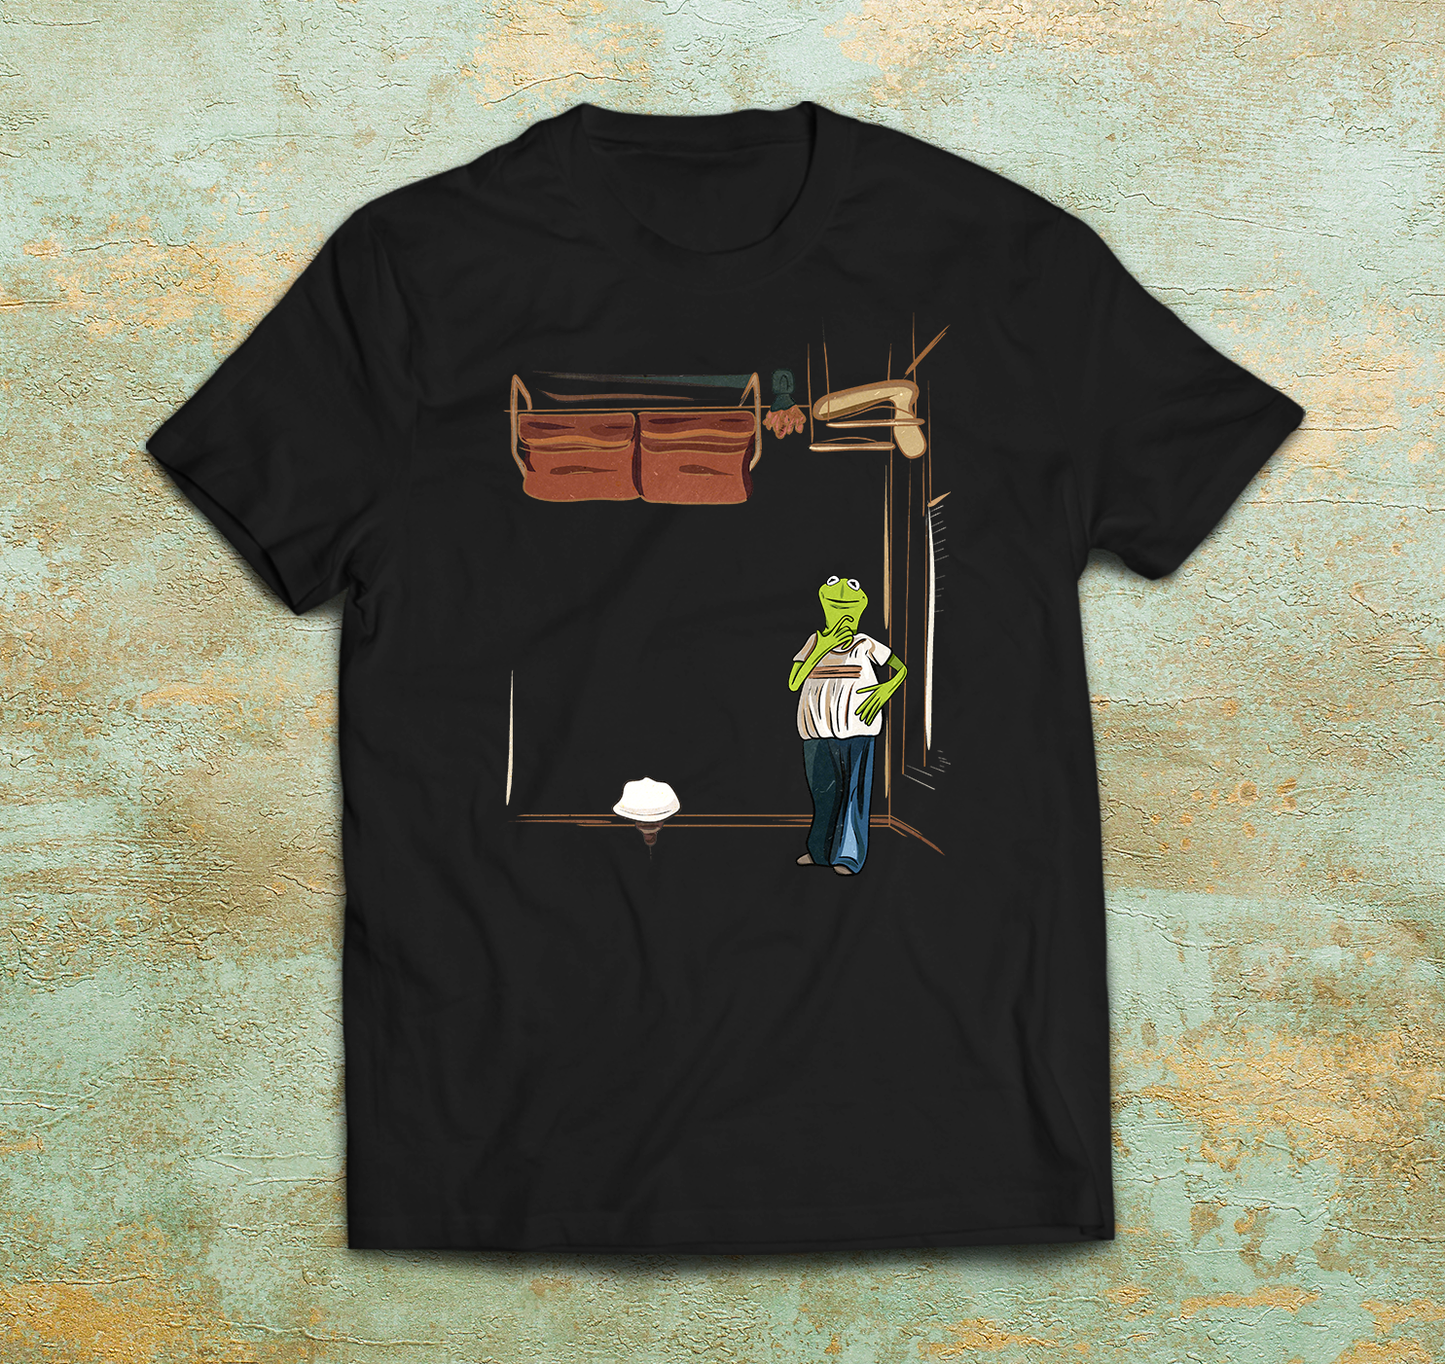 Kermit's House Parody Shirt